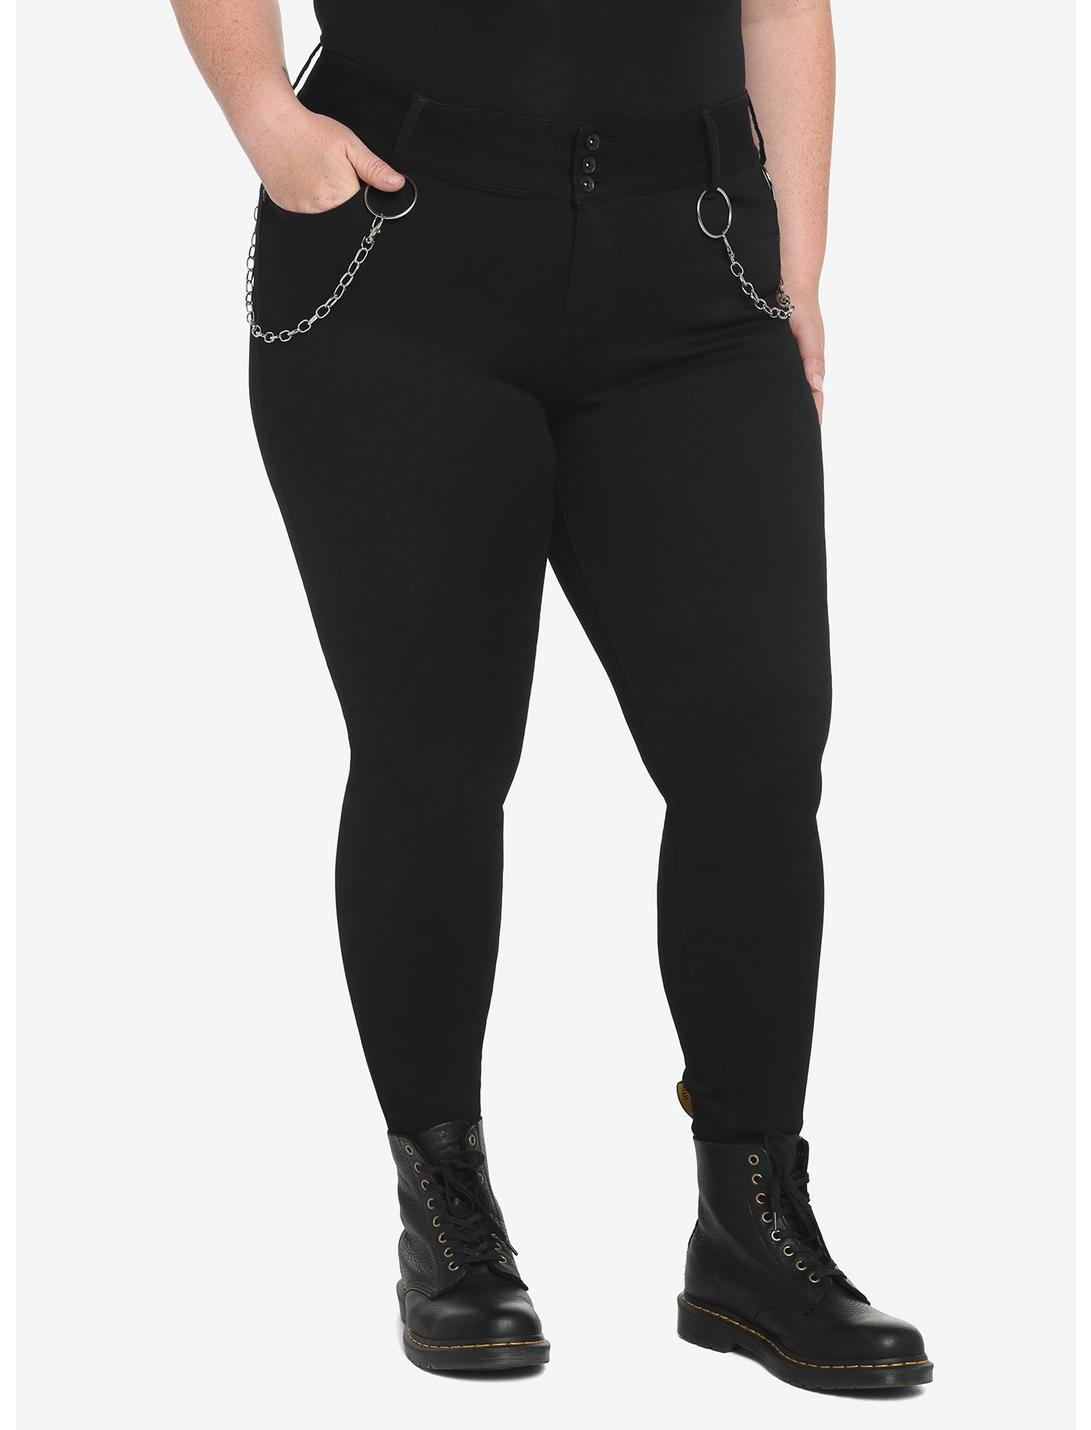 HT Denim Black O-Ring Chain Girls Hi-Rise Super Skinny Jeans Plus Size, BLACK, hi-res